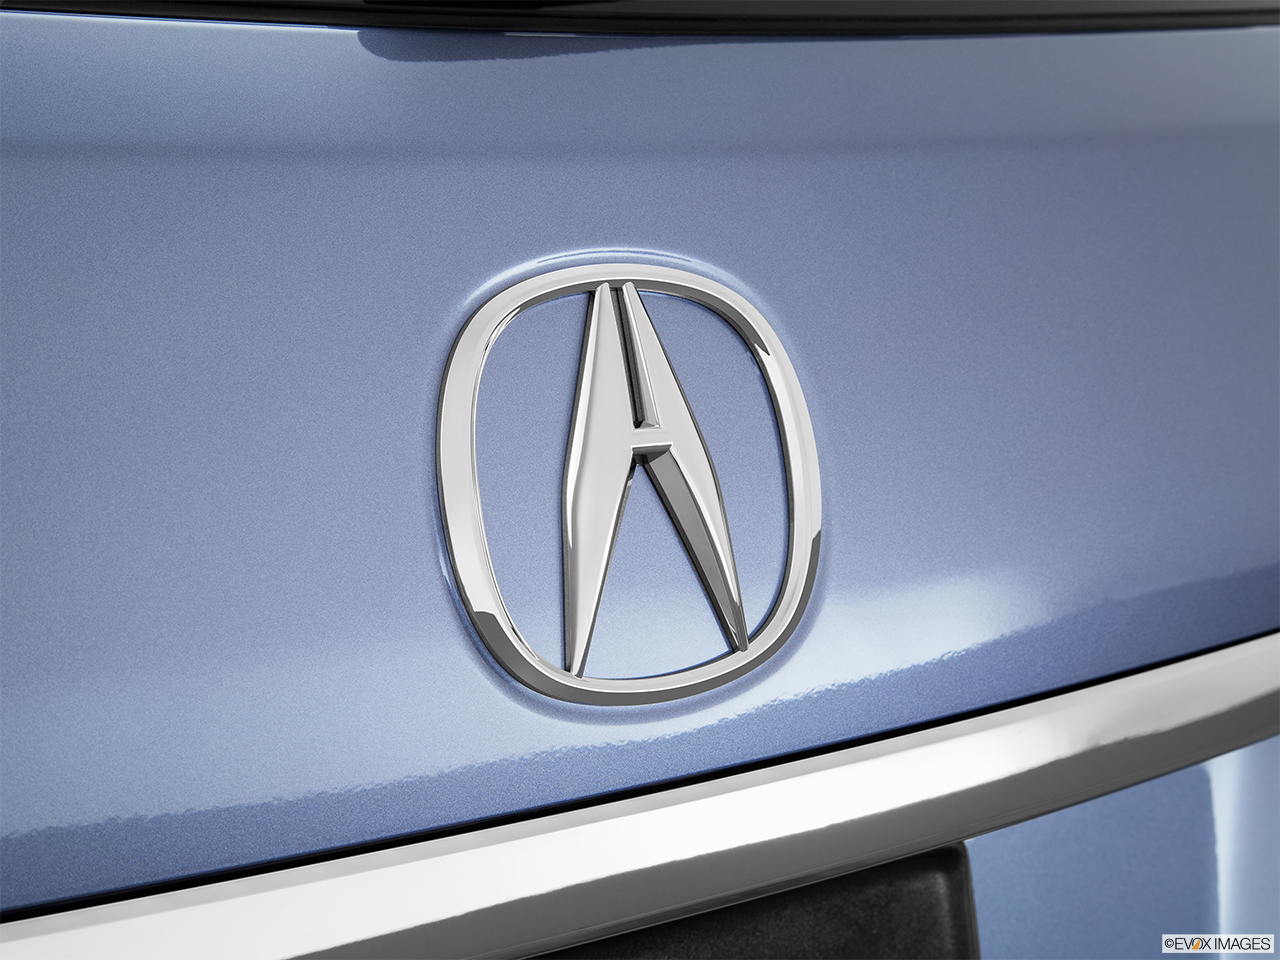 2015 Acura RDX AWD Rear manufacture badge/emblem 